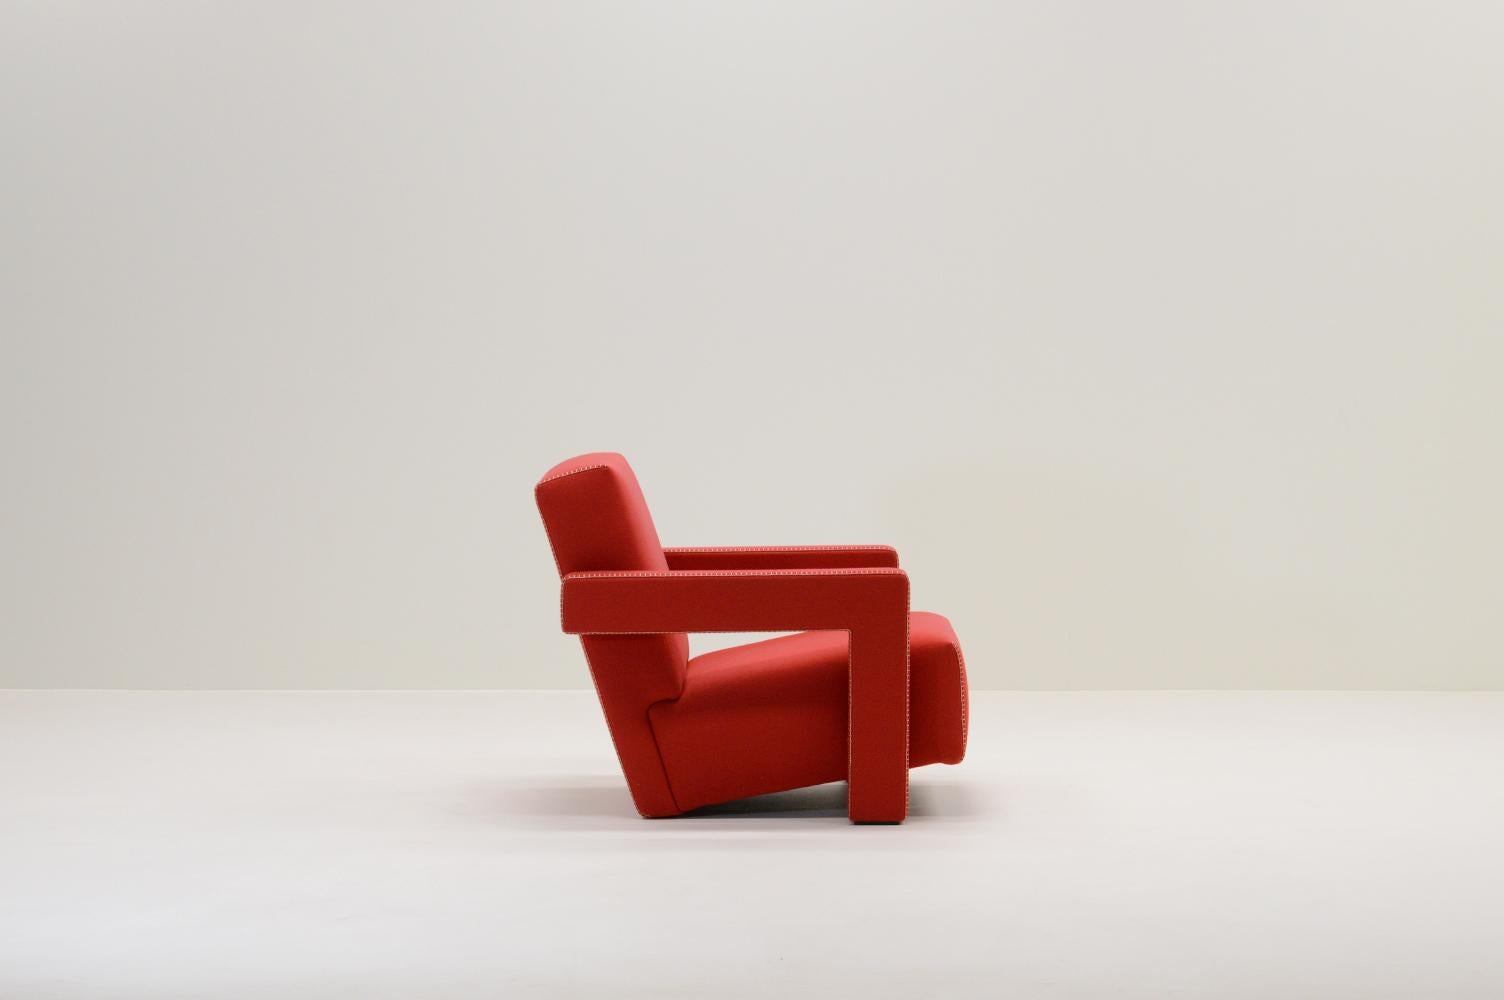 De Stijl “Utrecht” chair by Gerrit Rietveld for Cassina, 1990s Italy. For Sale